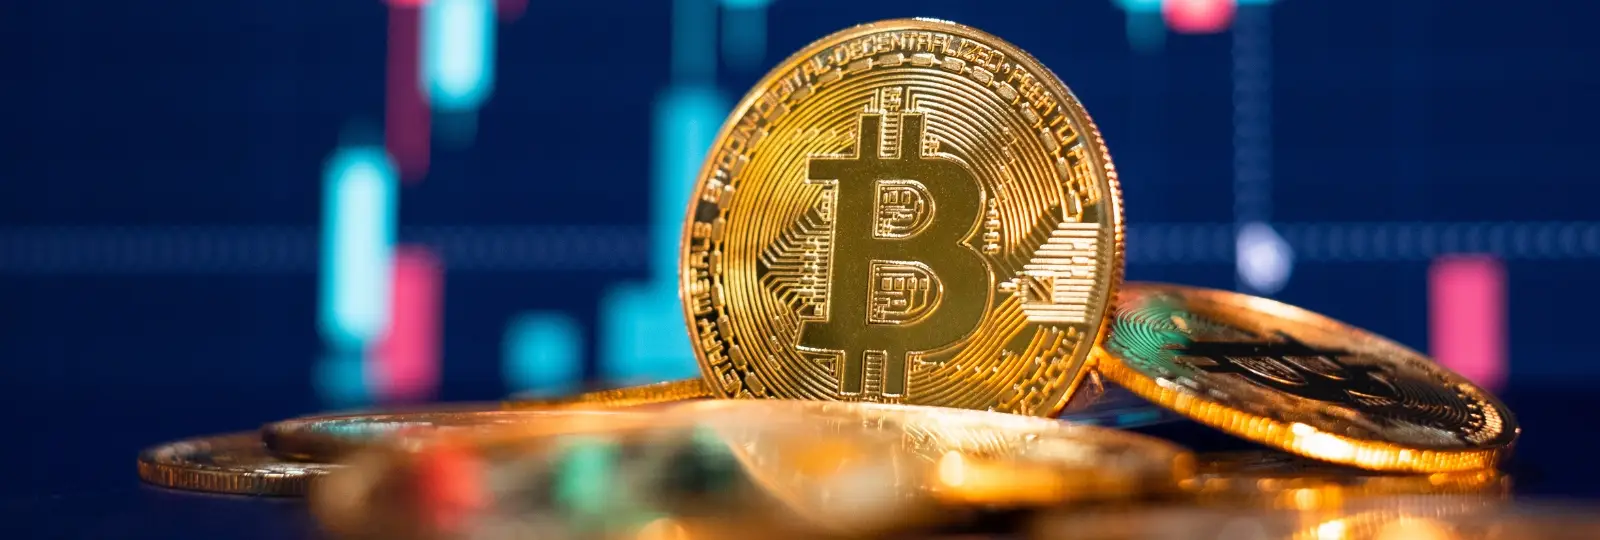 Bitcoin crawls under $70k before economic data release